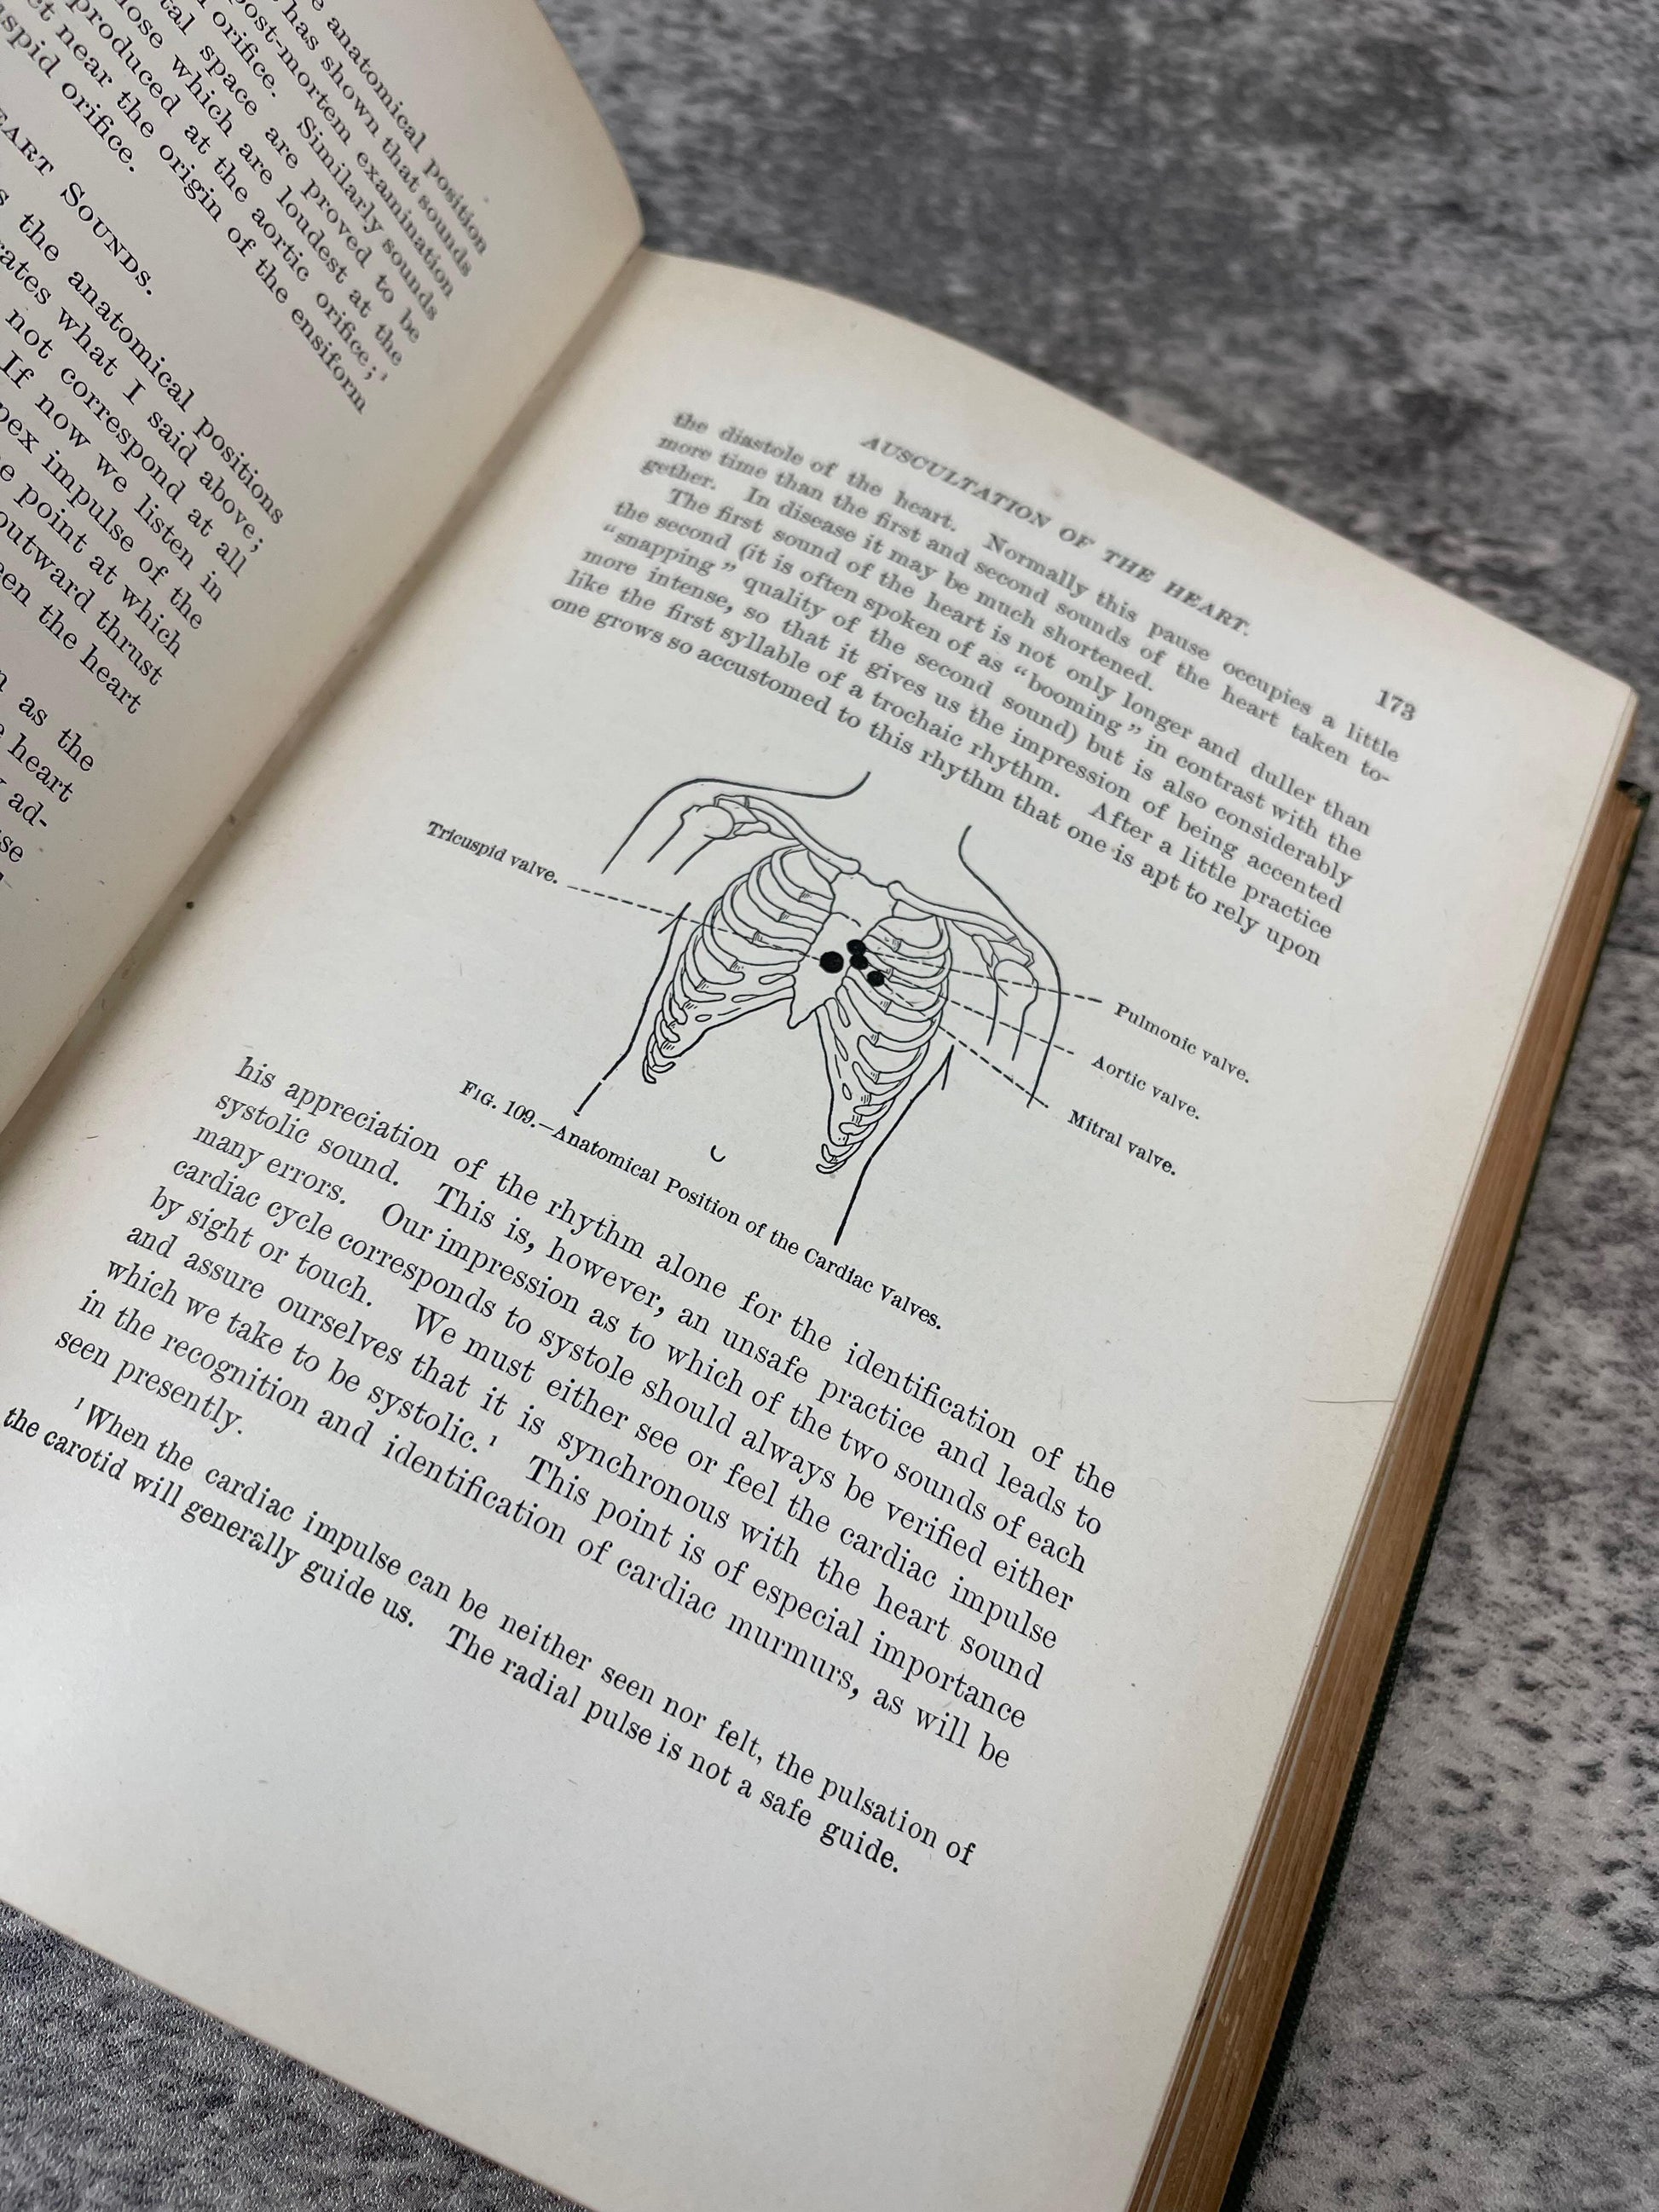 Physical Diagnosis / Ex-Library, Fourth Edition / 1910 - Precious Cache